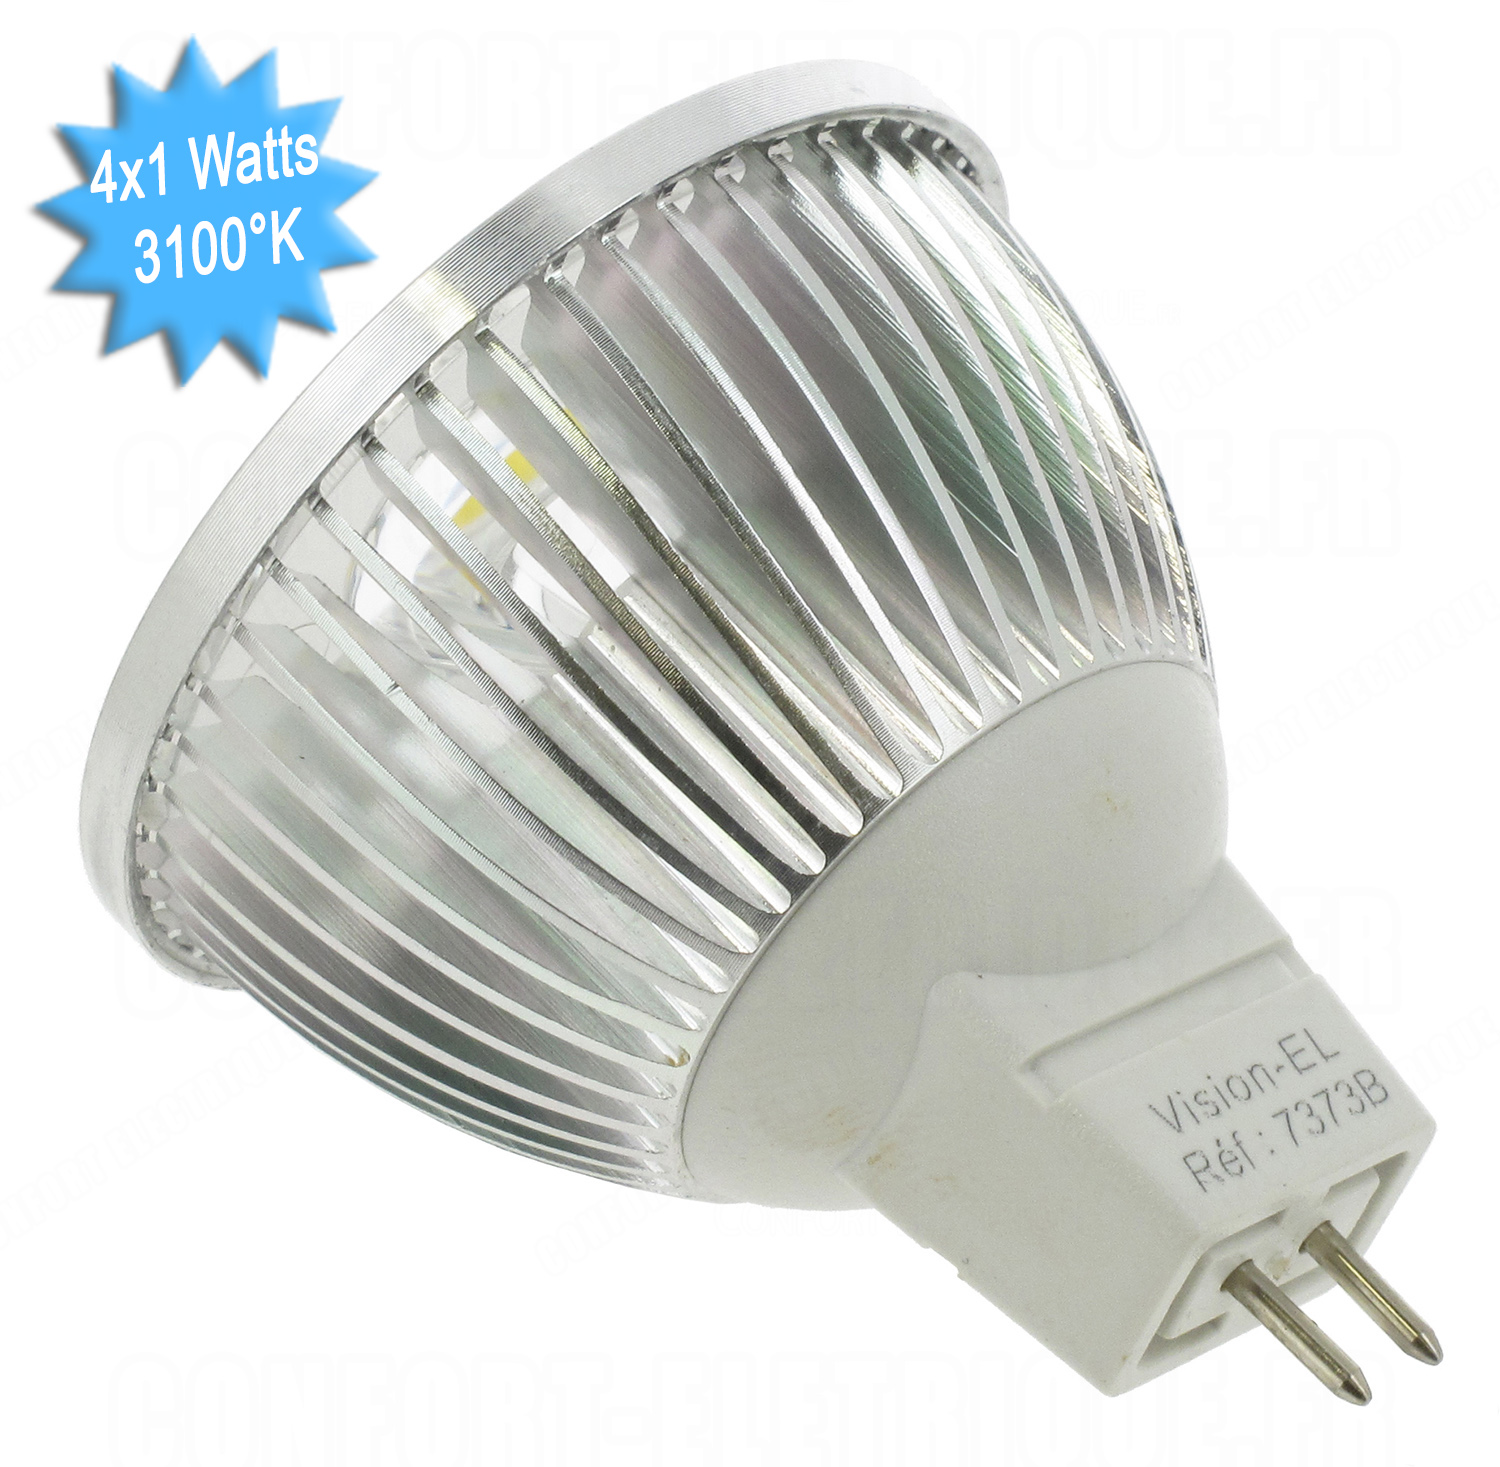 Lampe à LED Vision-EL GU5.3 4x1 Watts 3100K 12 Volts 45D - 6..